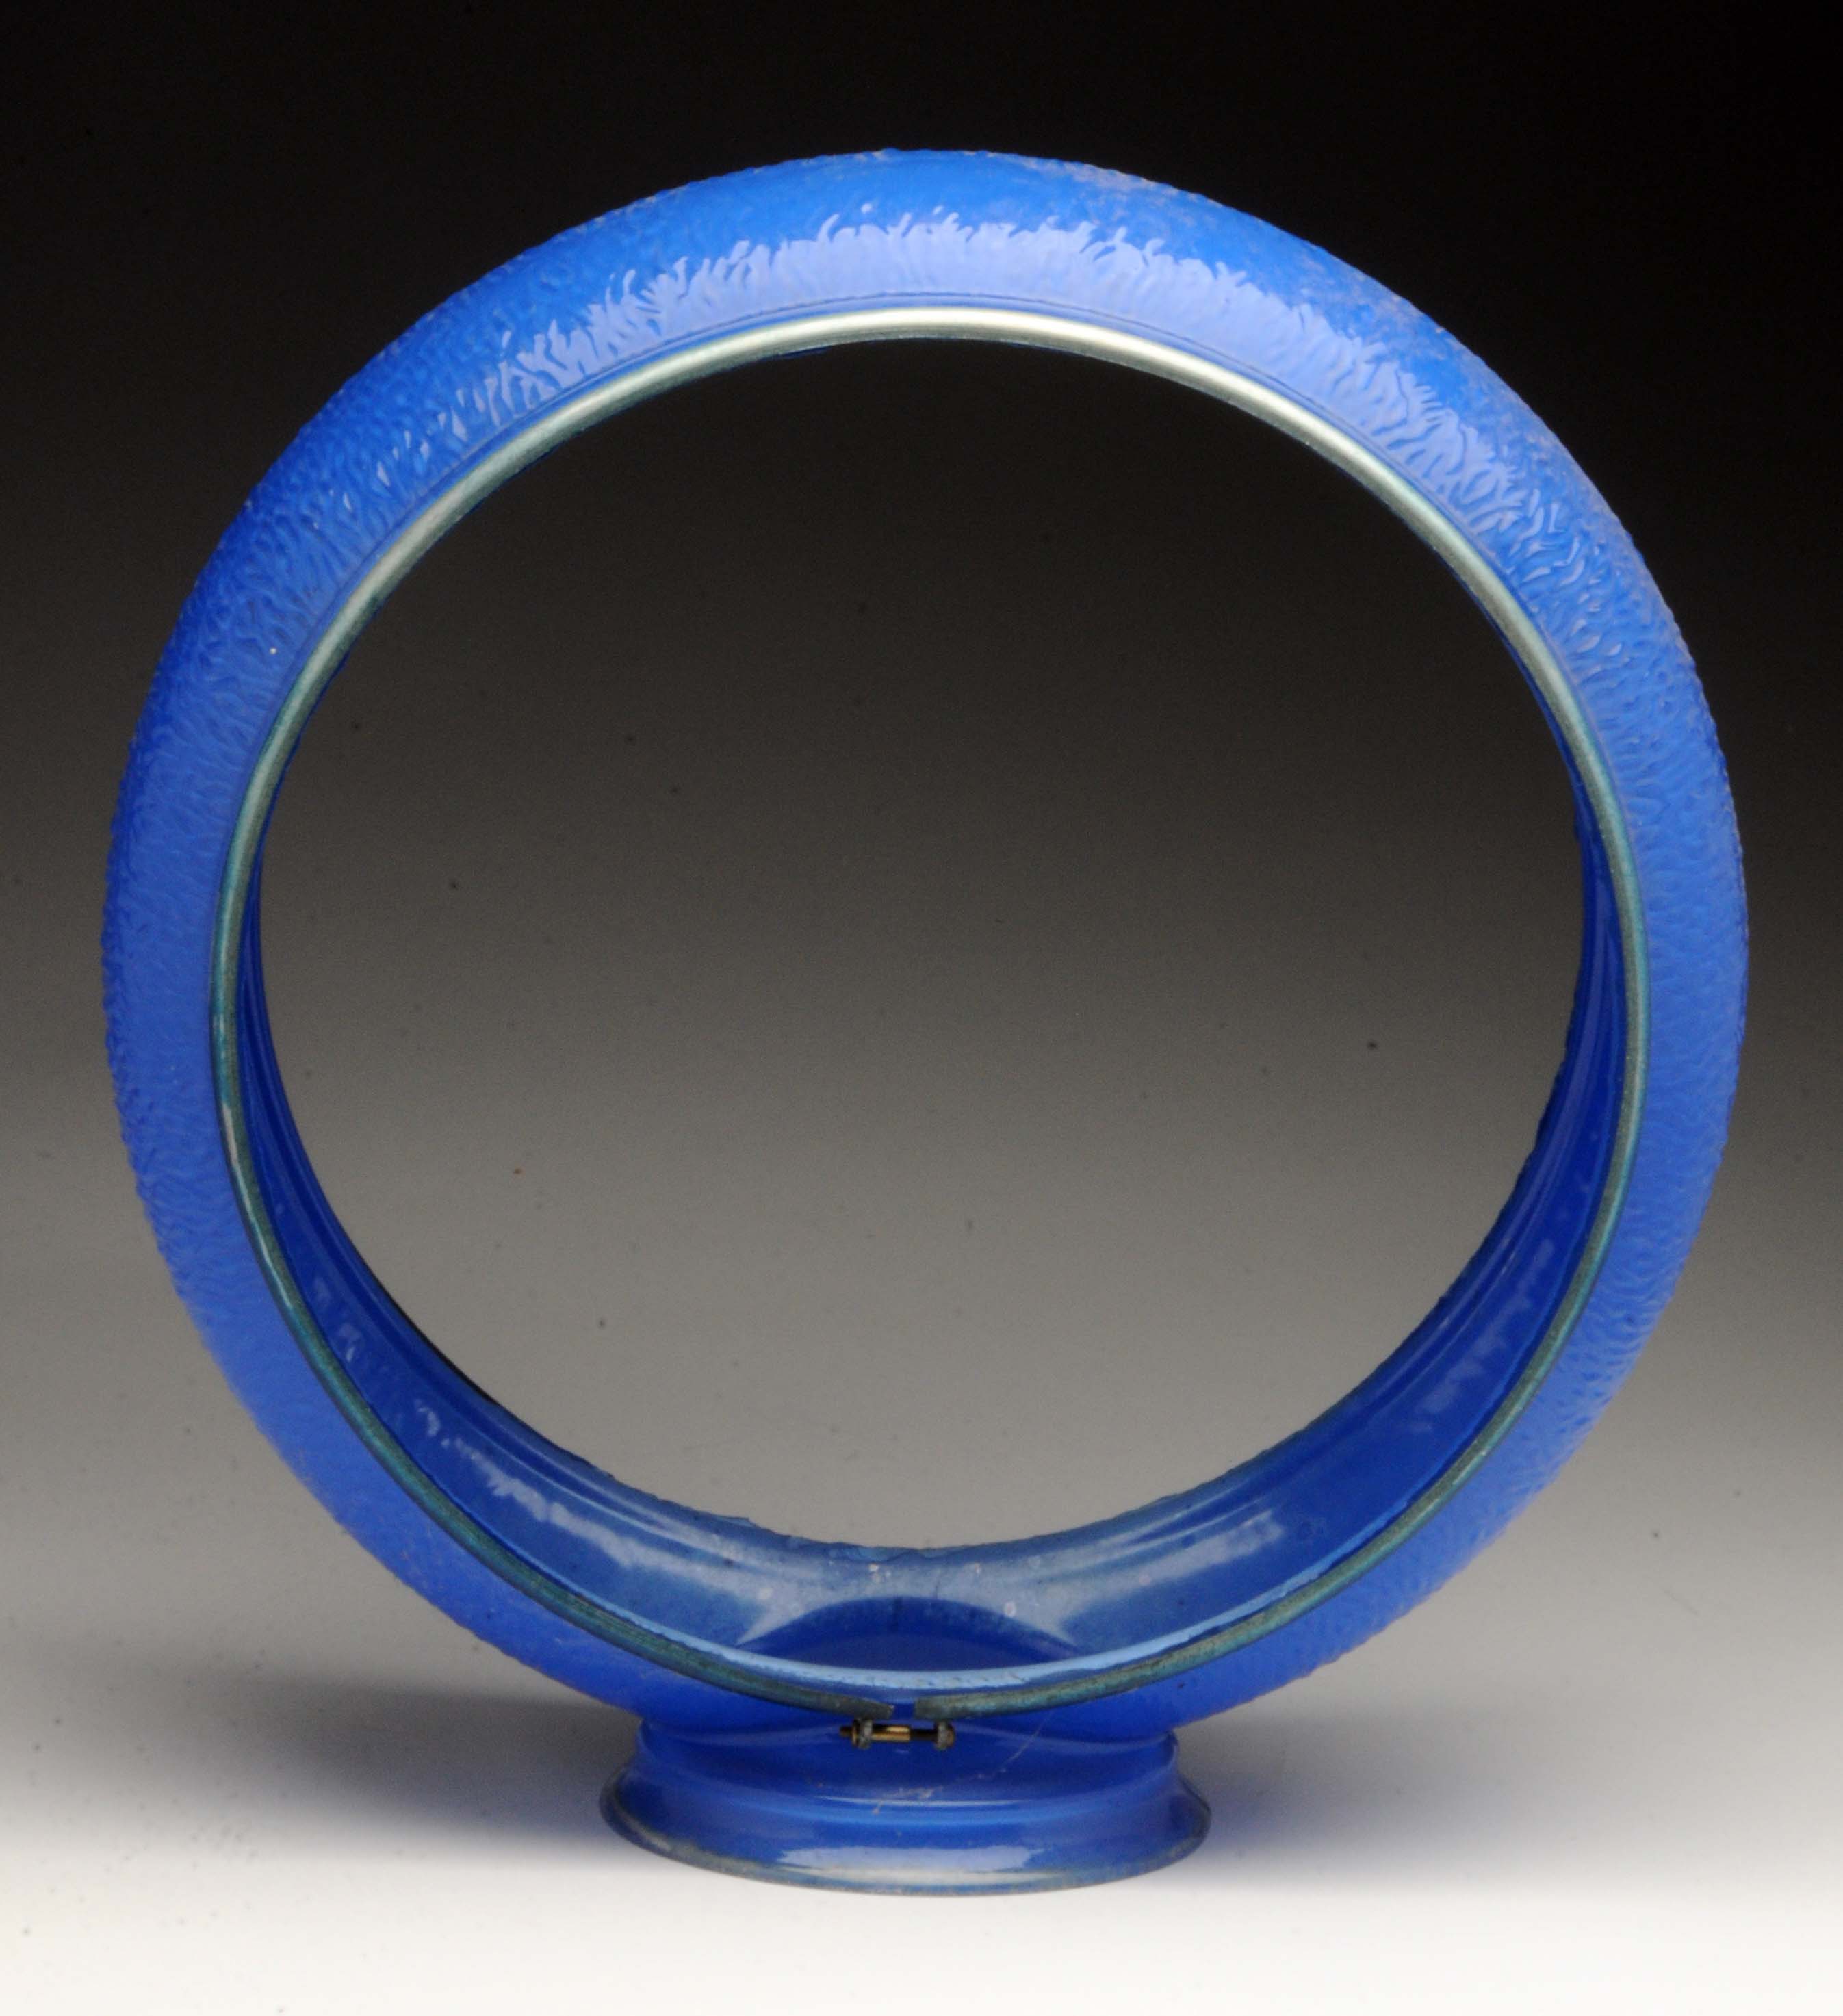 Lot #28, Original Blue Ripple Globe Body, estimated at $7,500-$10,000.